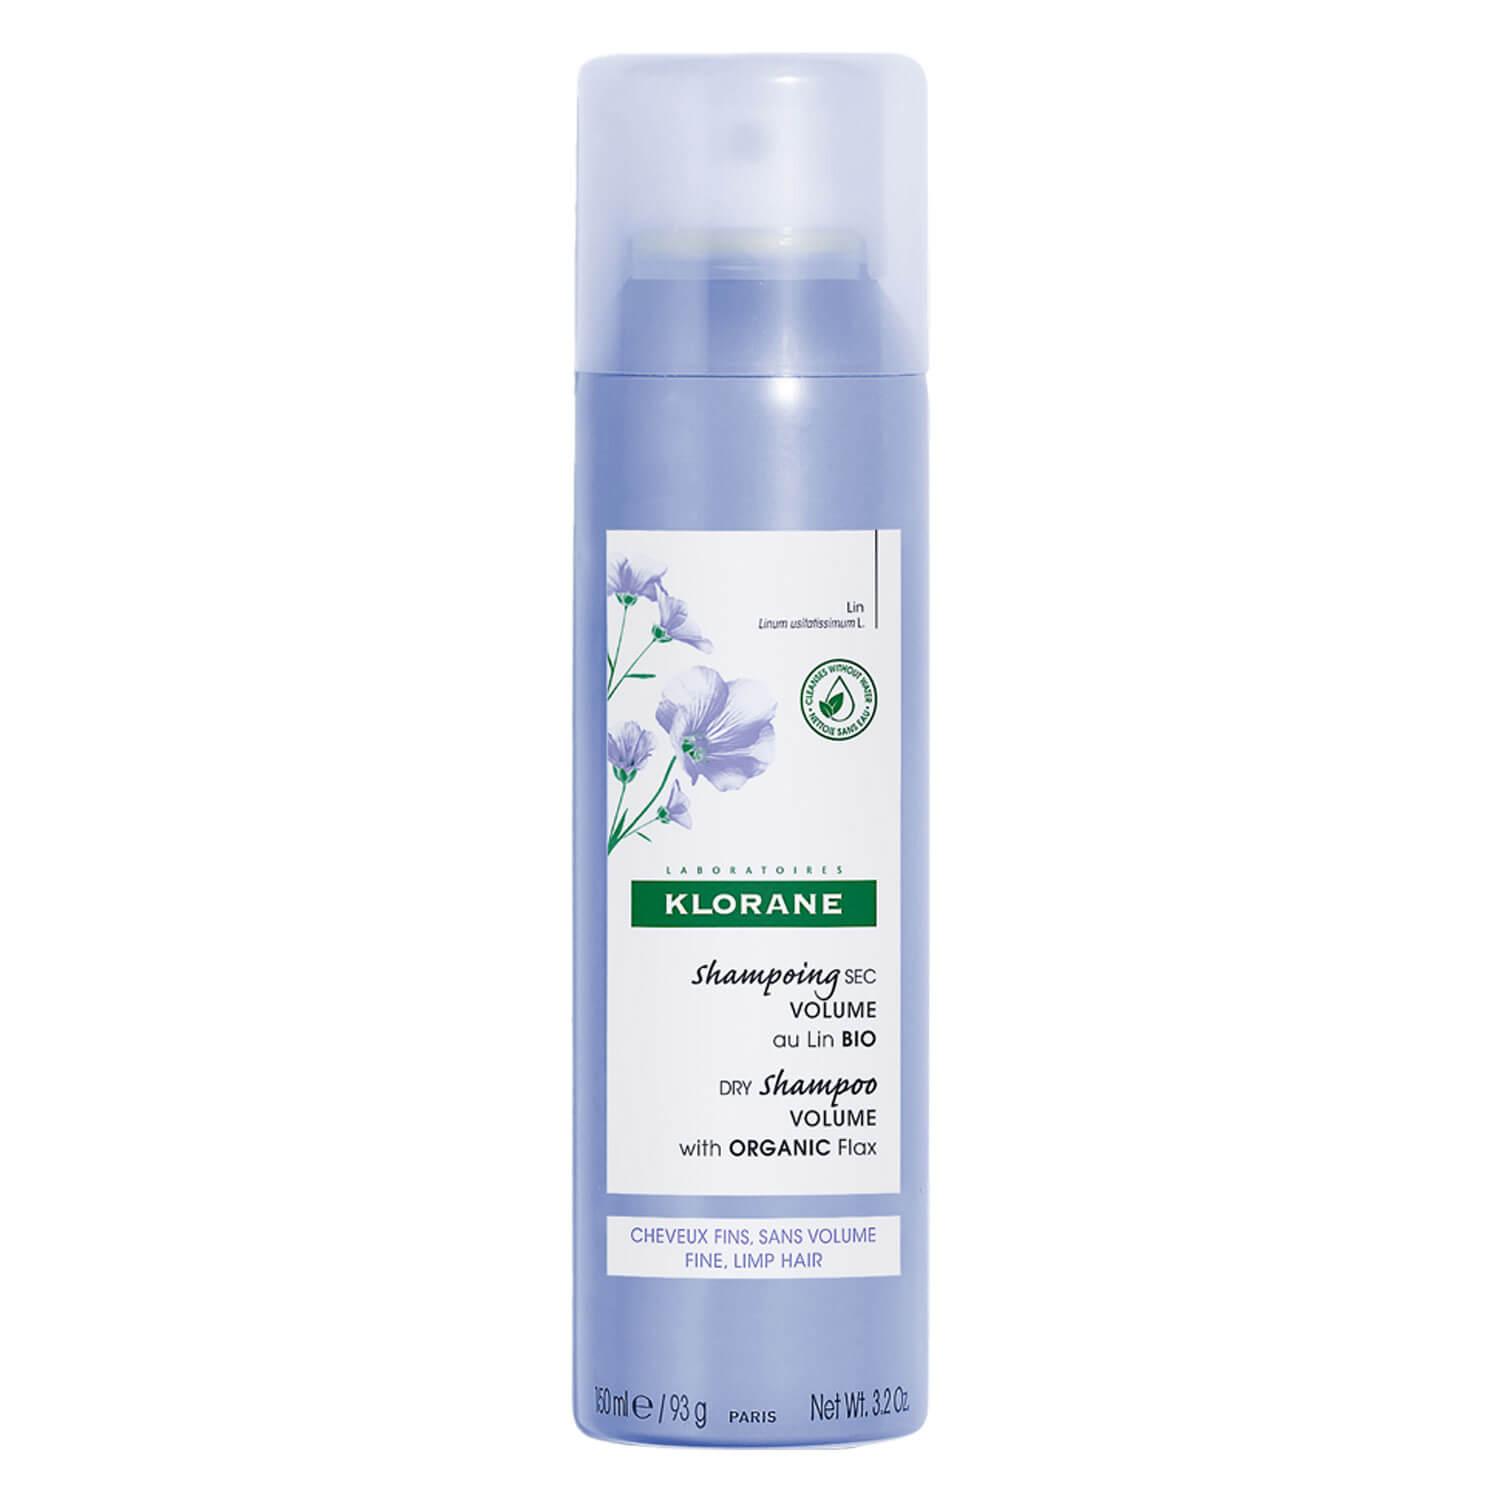 KLORANE Hair - Volume Flax Fiber Dry Shampoo